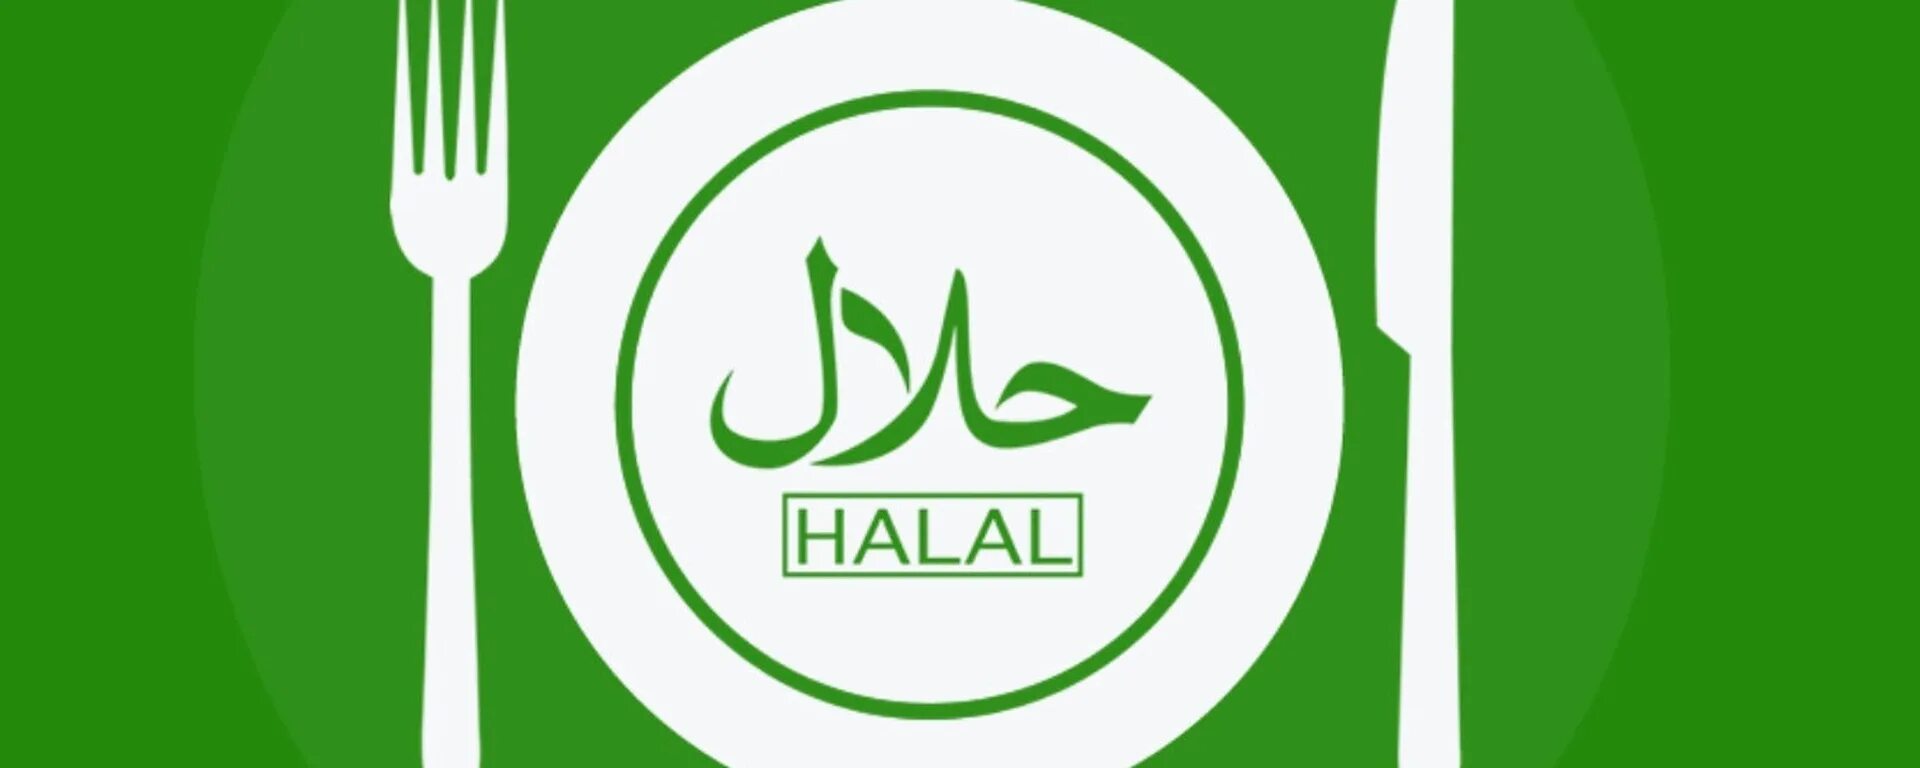 Халяль нальчик. Халяль. Эмблема Халяль. Логотип кафе Халяль. Значок Халяль зеленый.